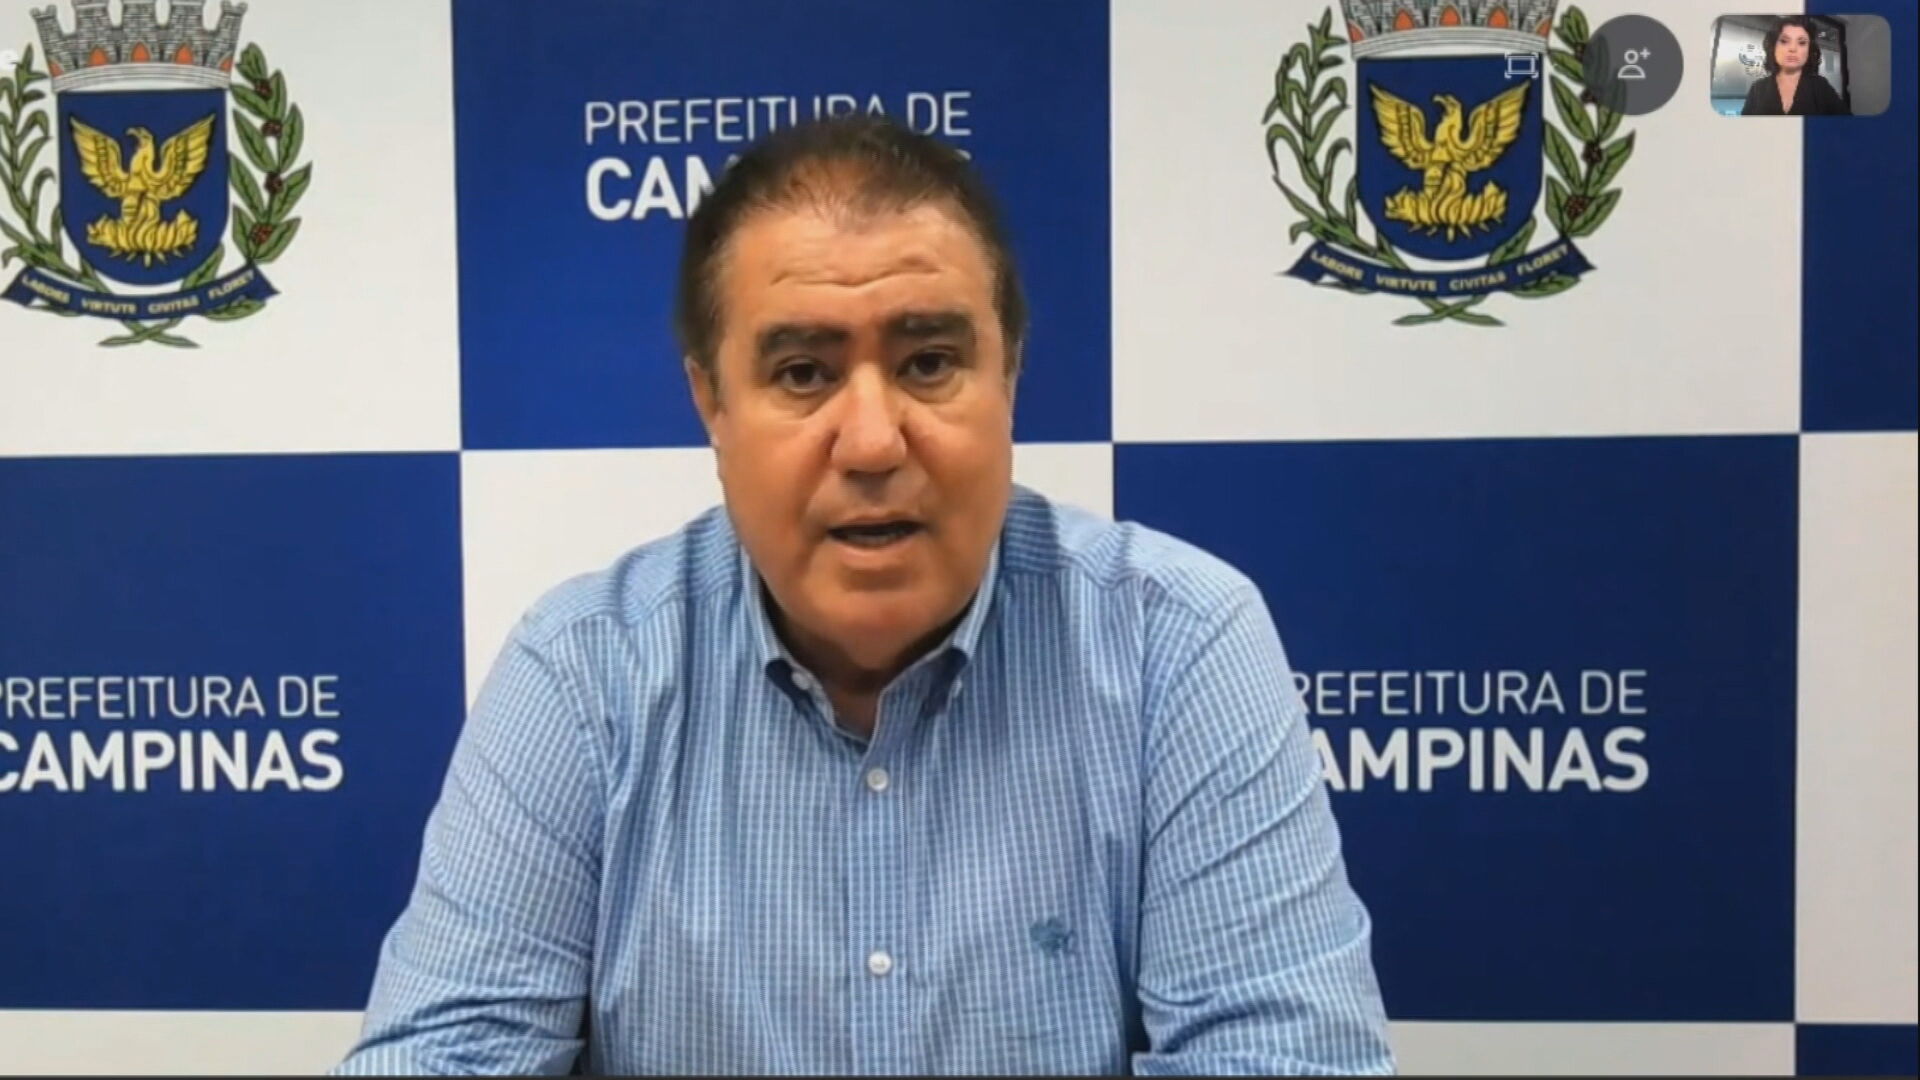 Presidente da Frente Nacional de Prefeitos e prefeito de Campinas, Jonas Donizet